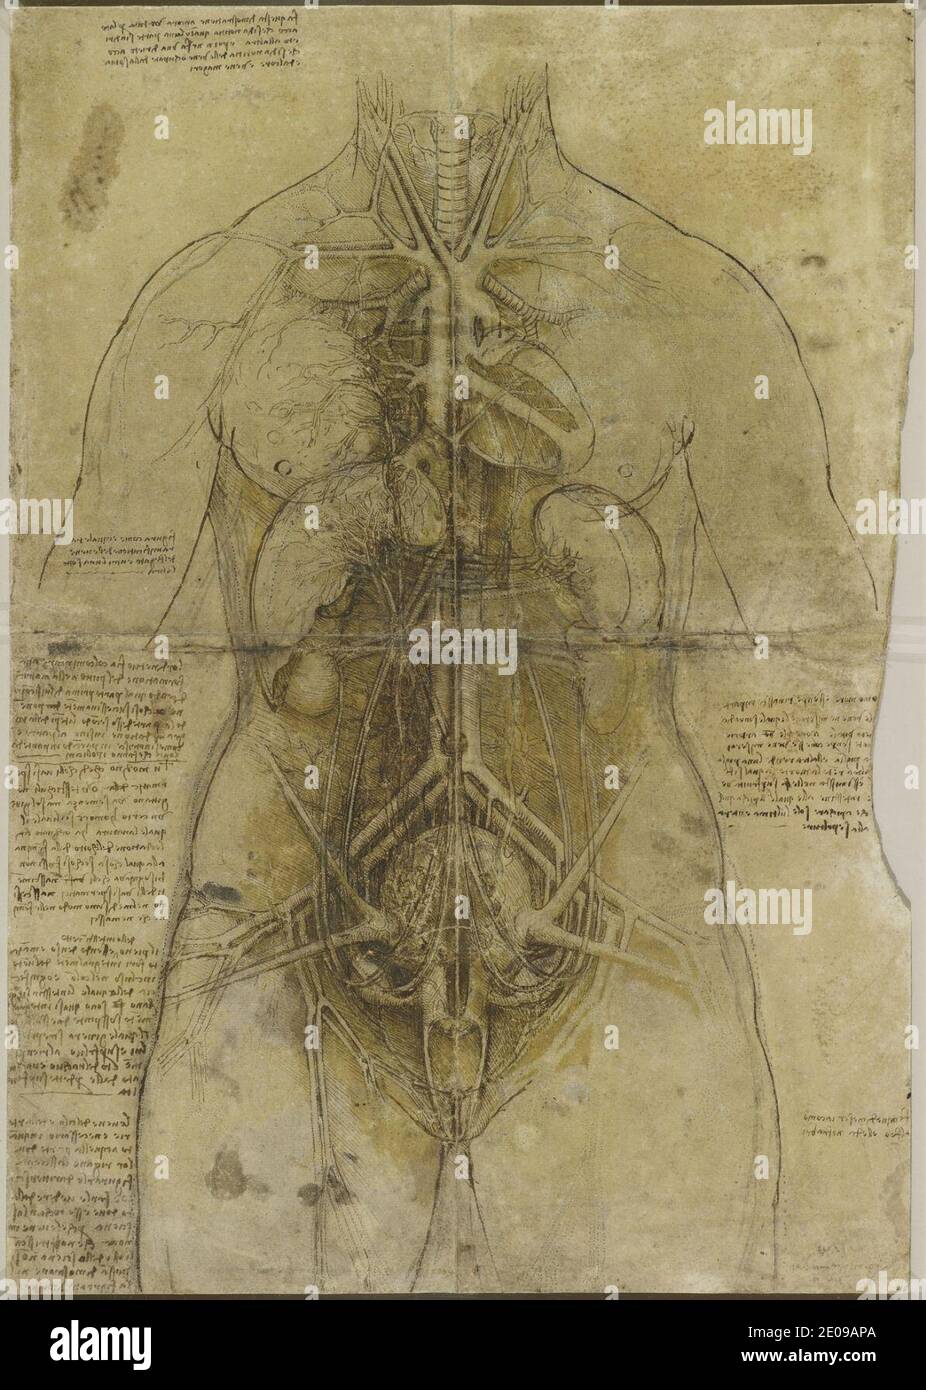 Leonardo da Vinci - The cardiovascular system and principal organs of a woman c.1509-10. Stock Photo